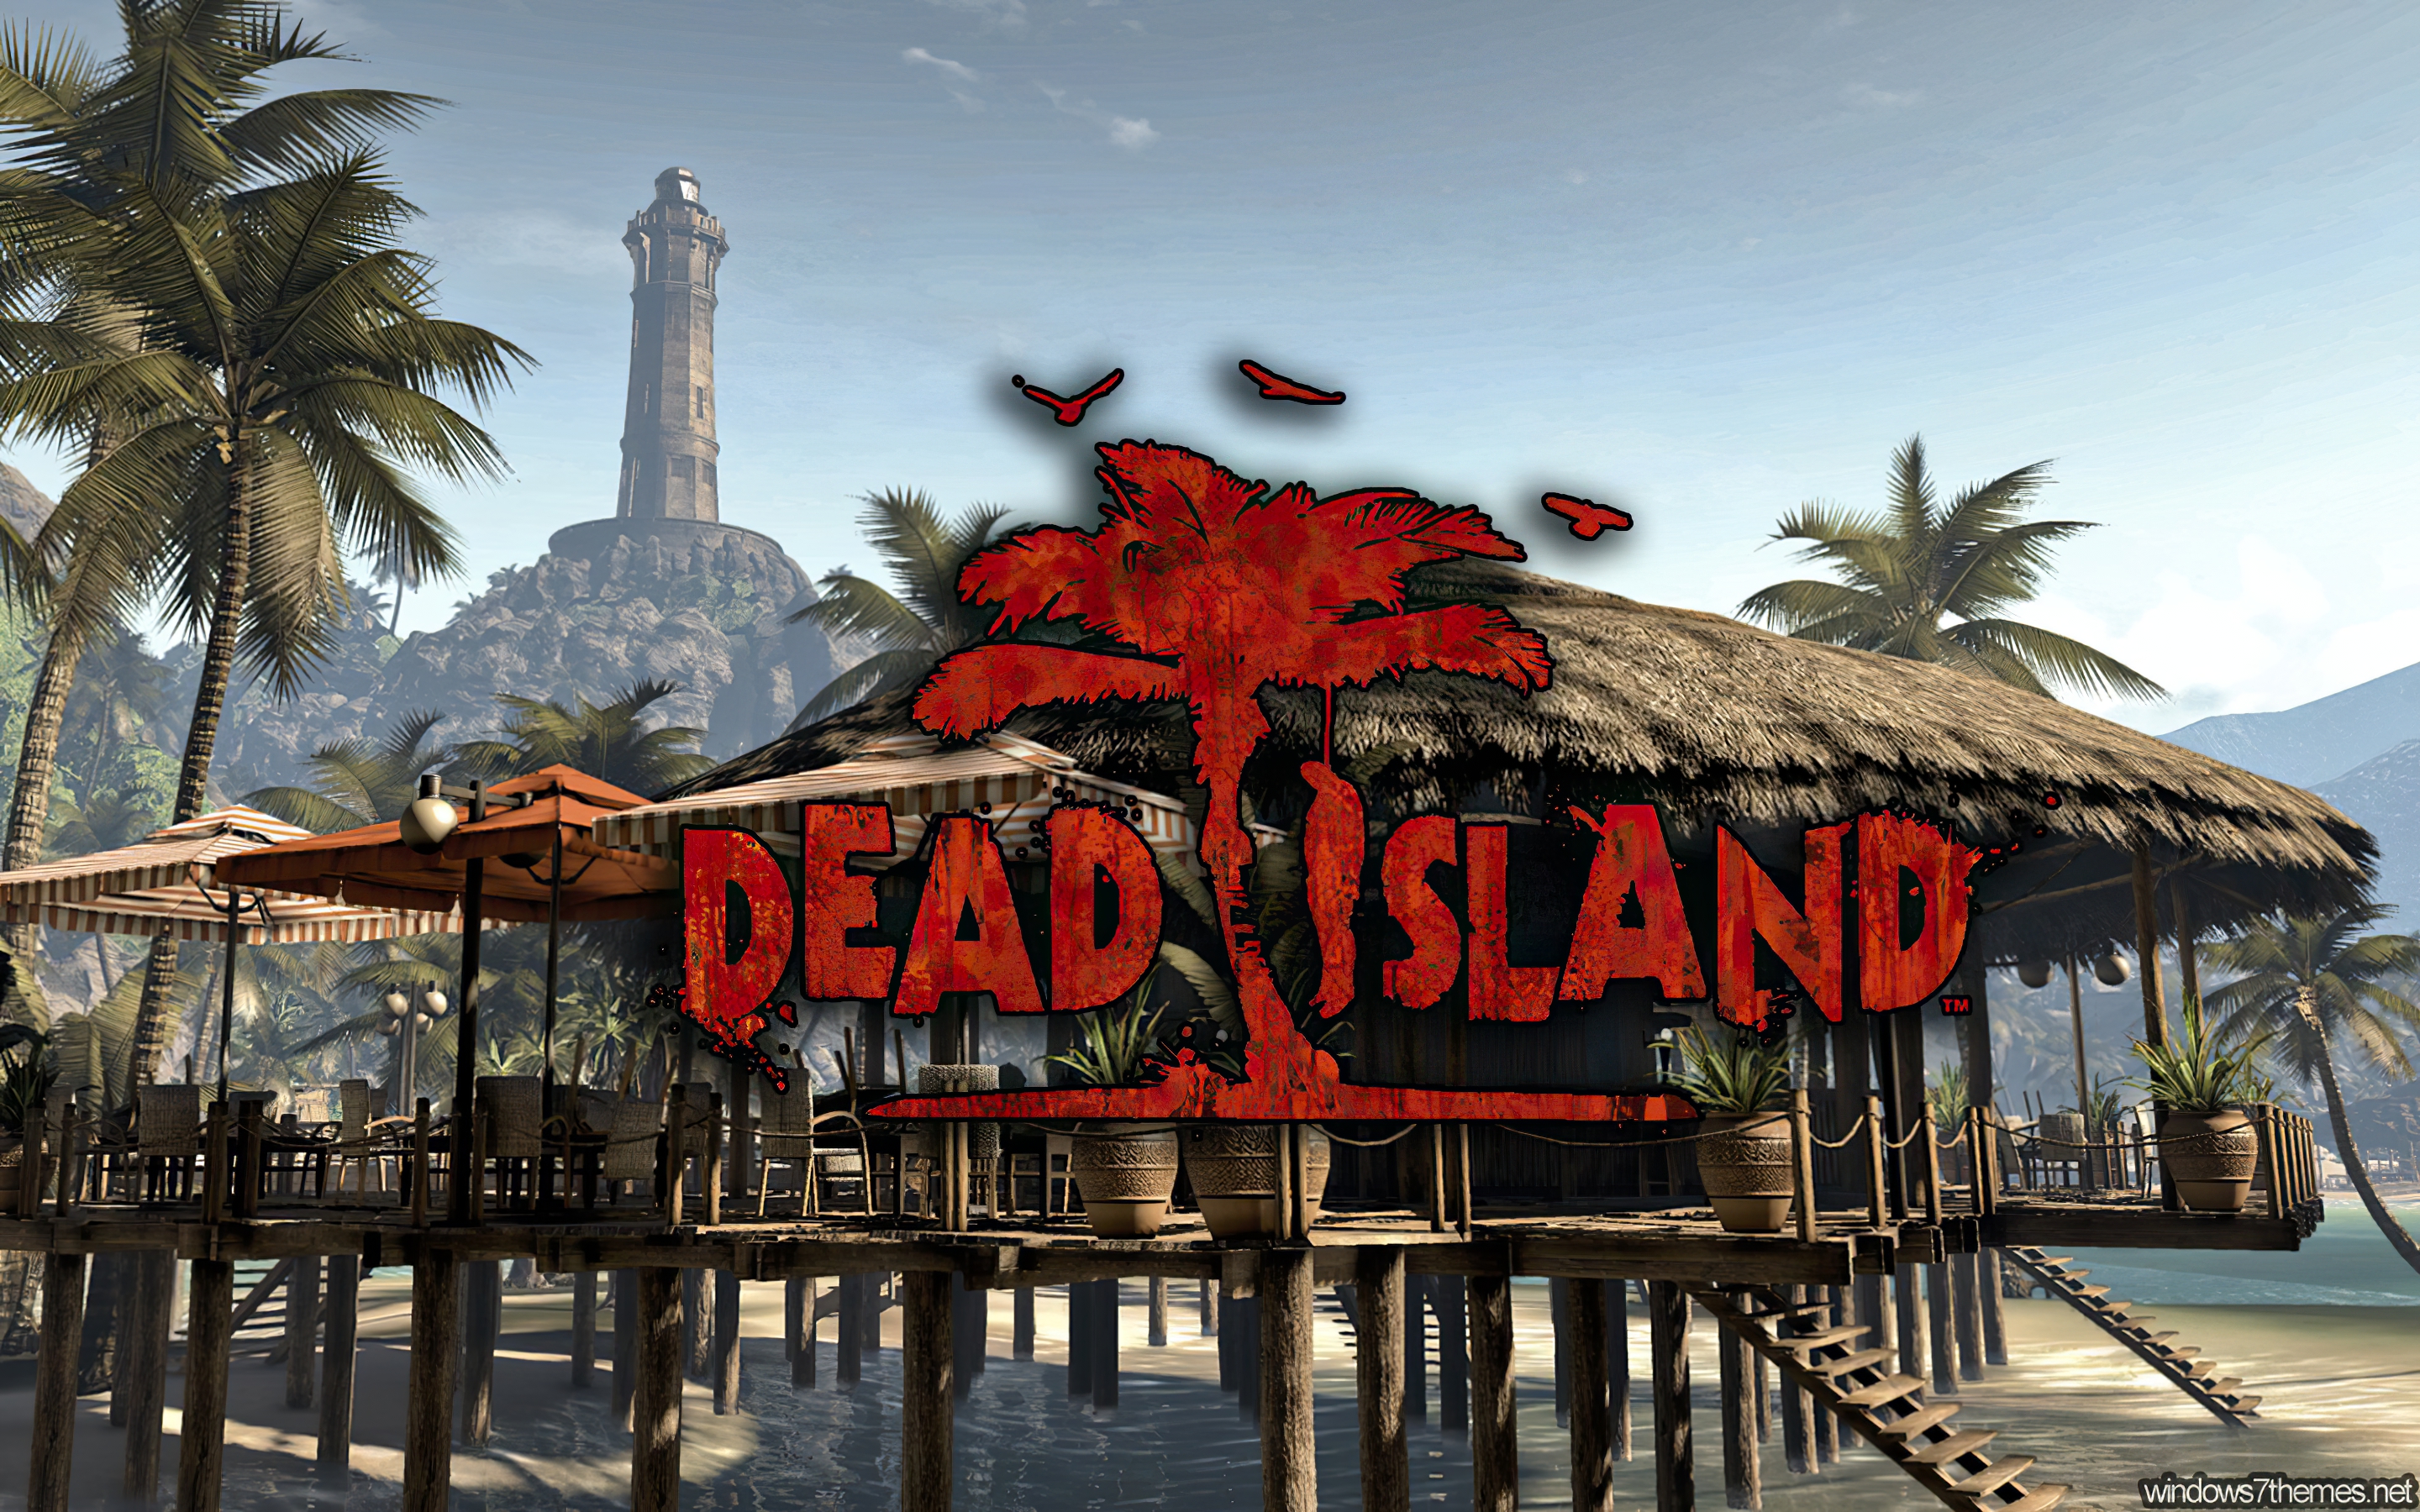 Dead island mods